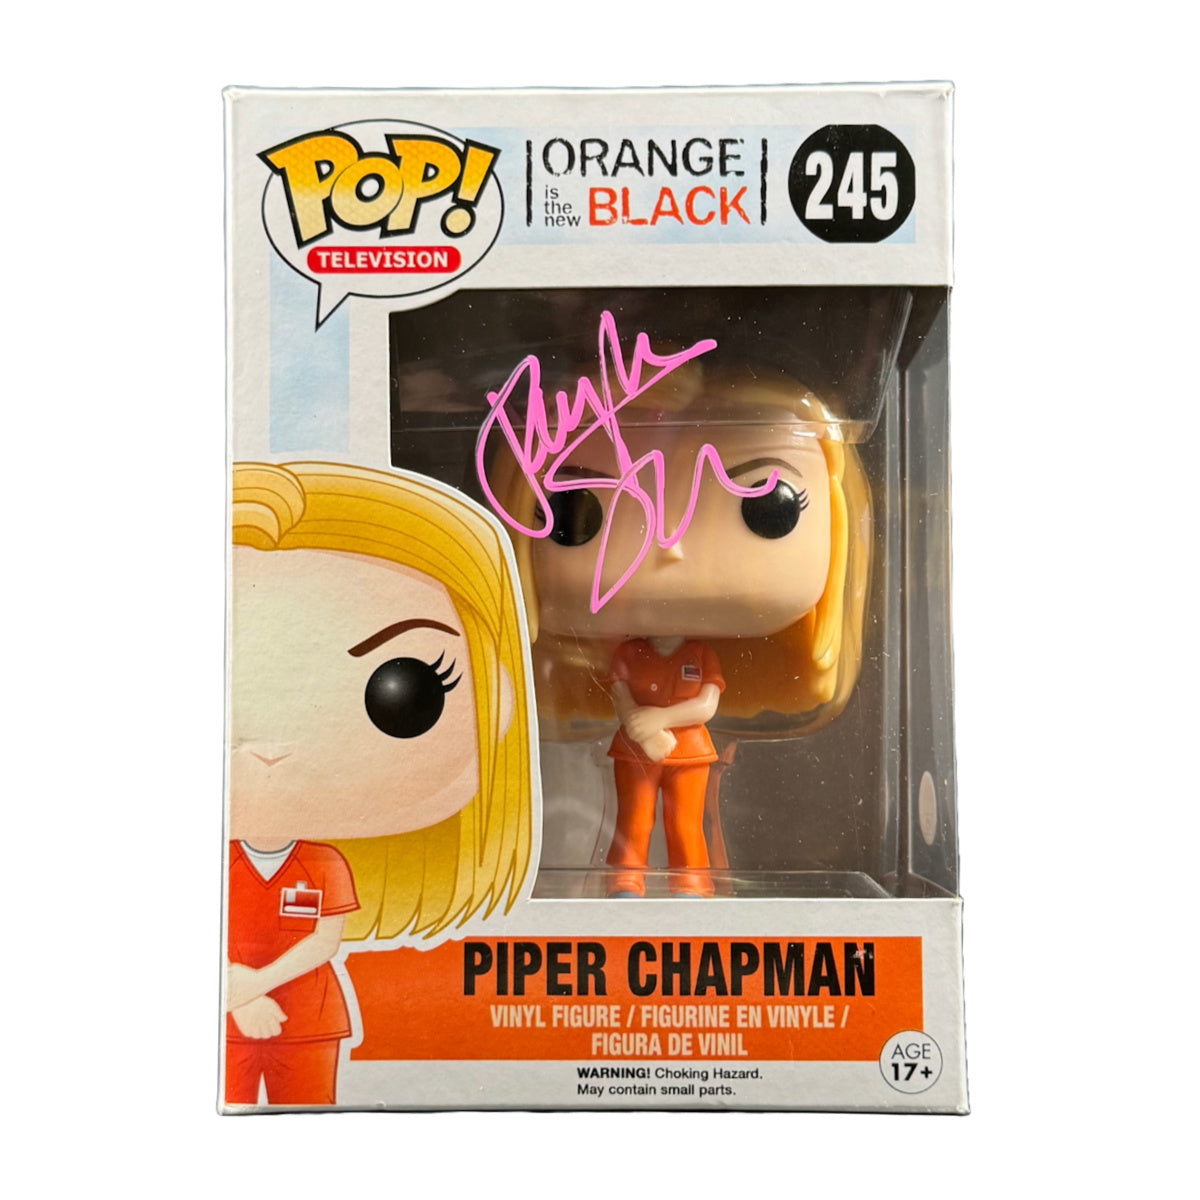 Taylor Schilling "Piper Chapman" Signed Funko Pop #245 - Orange is the New Black with JSA COA